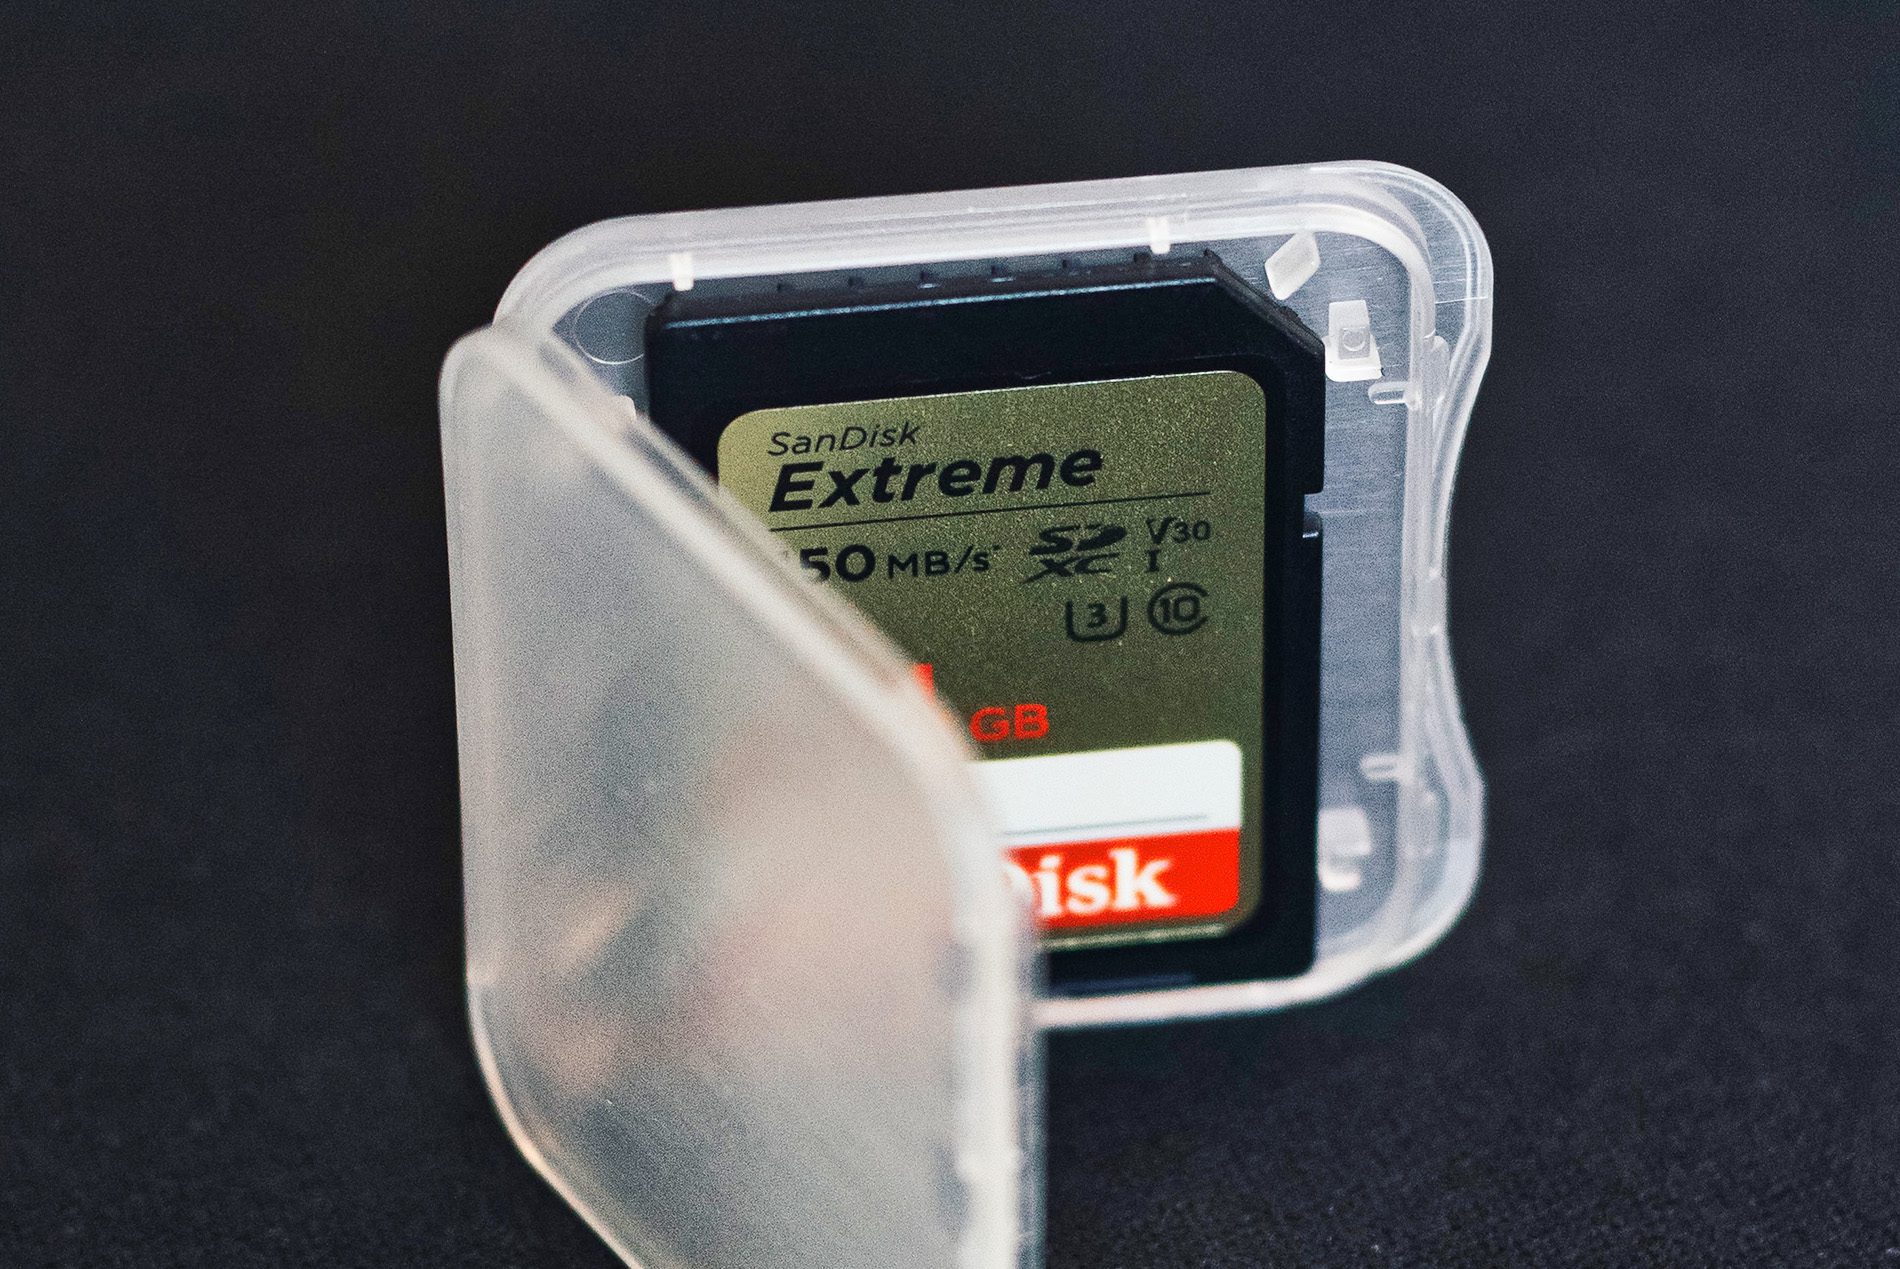 SanDisk 512 Go Extreme PRO microSDXC carte + RescuePro Deluxe